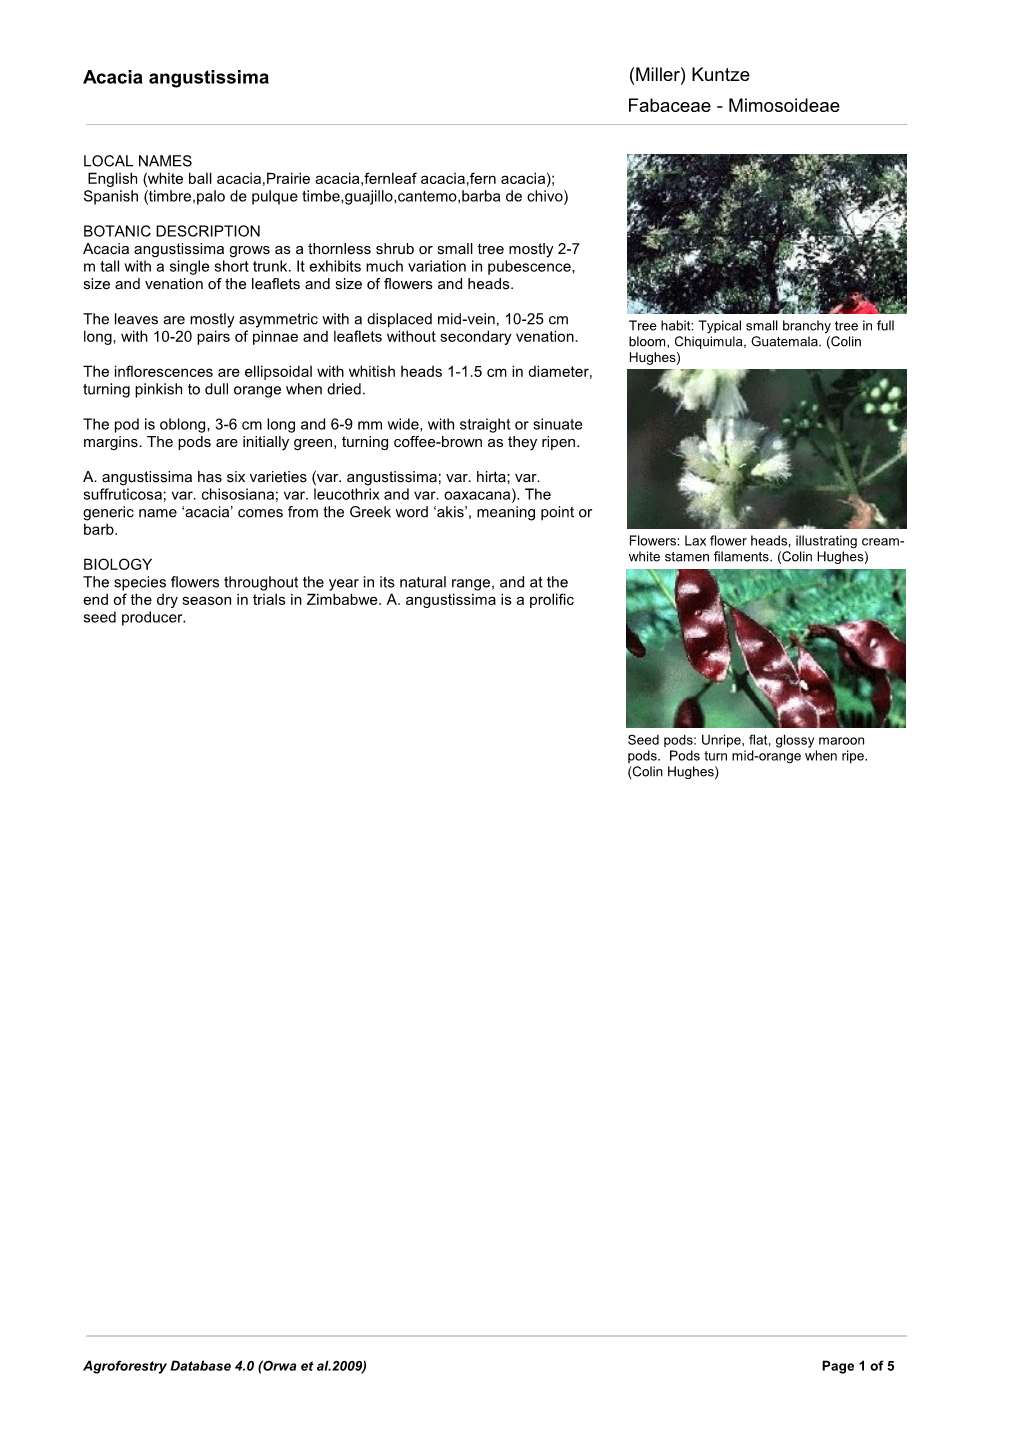 Acacia Angustissima (Miller) Kuntze Fabaceae - Mimosoideae